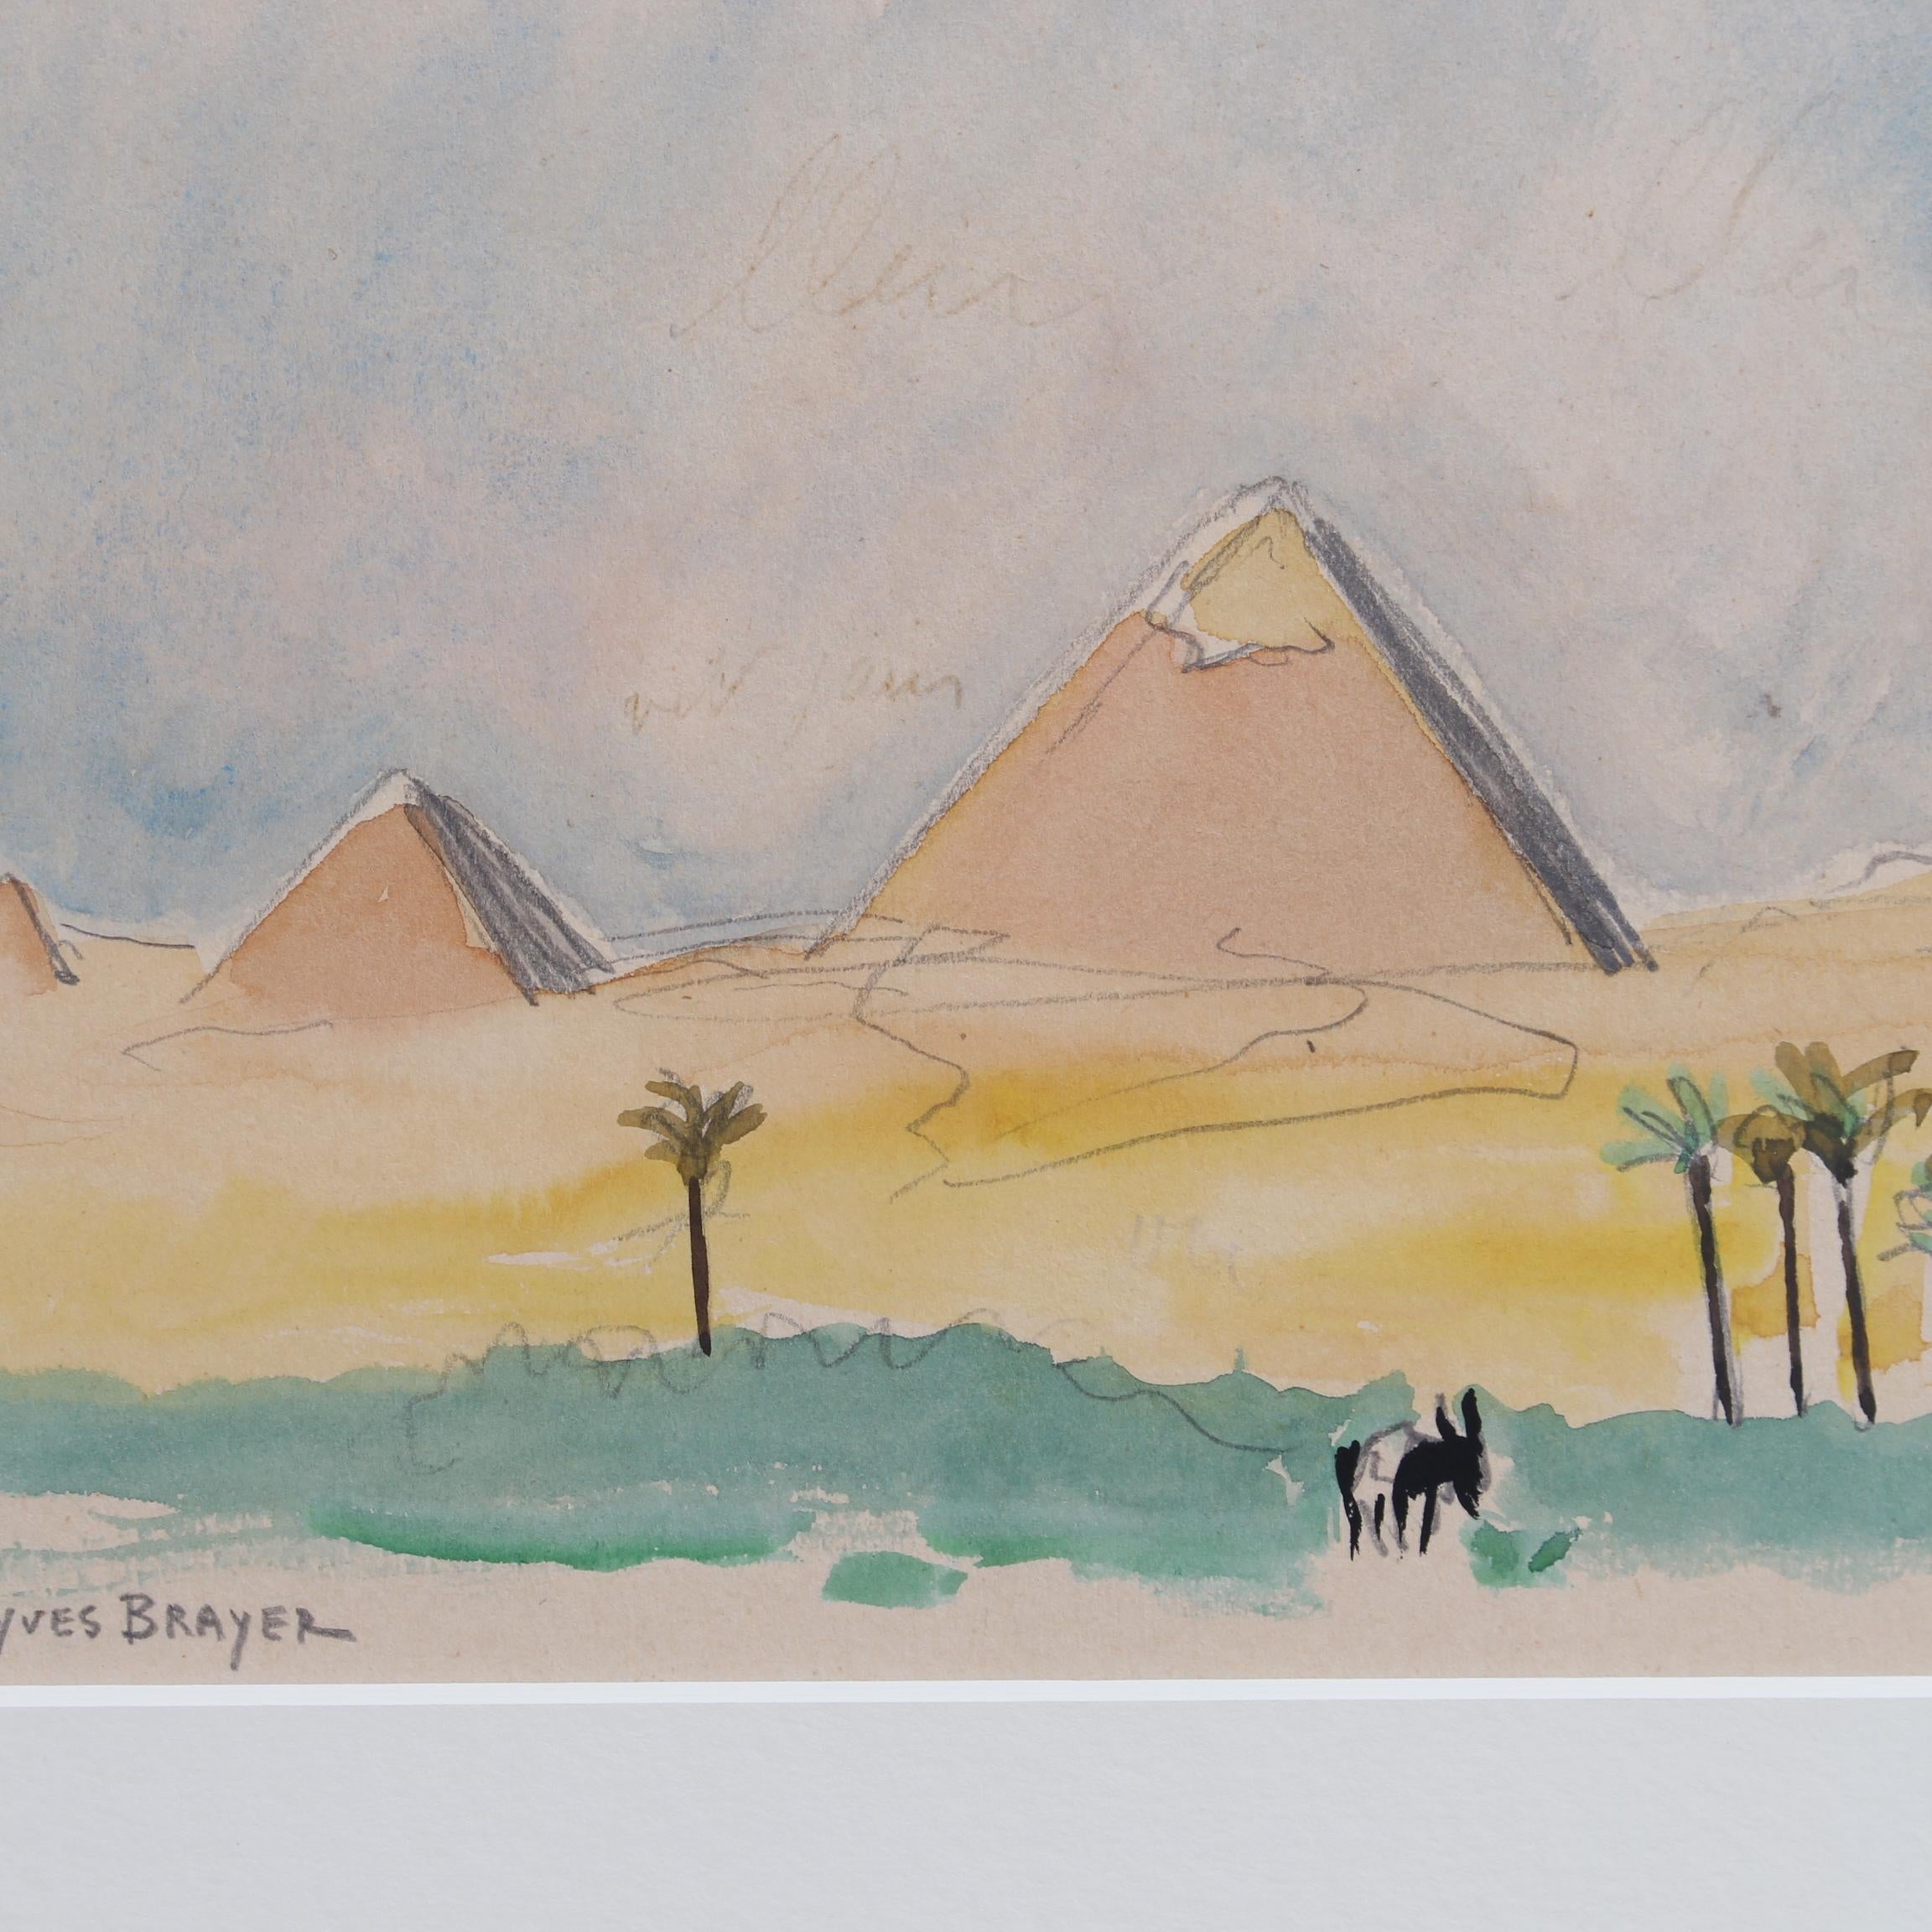 The Pyramids of Giza 2